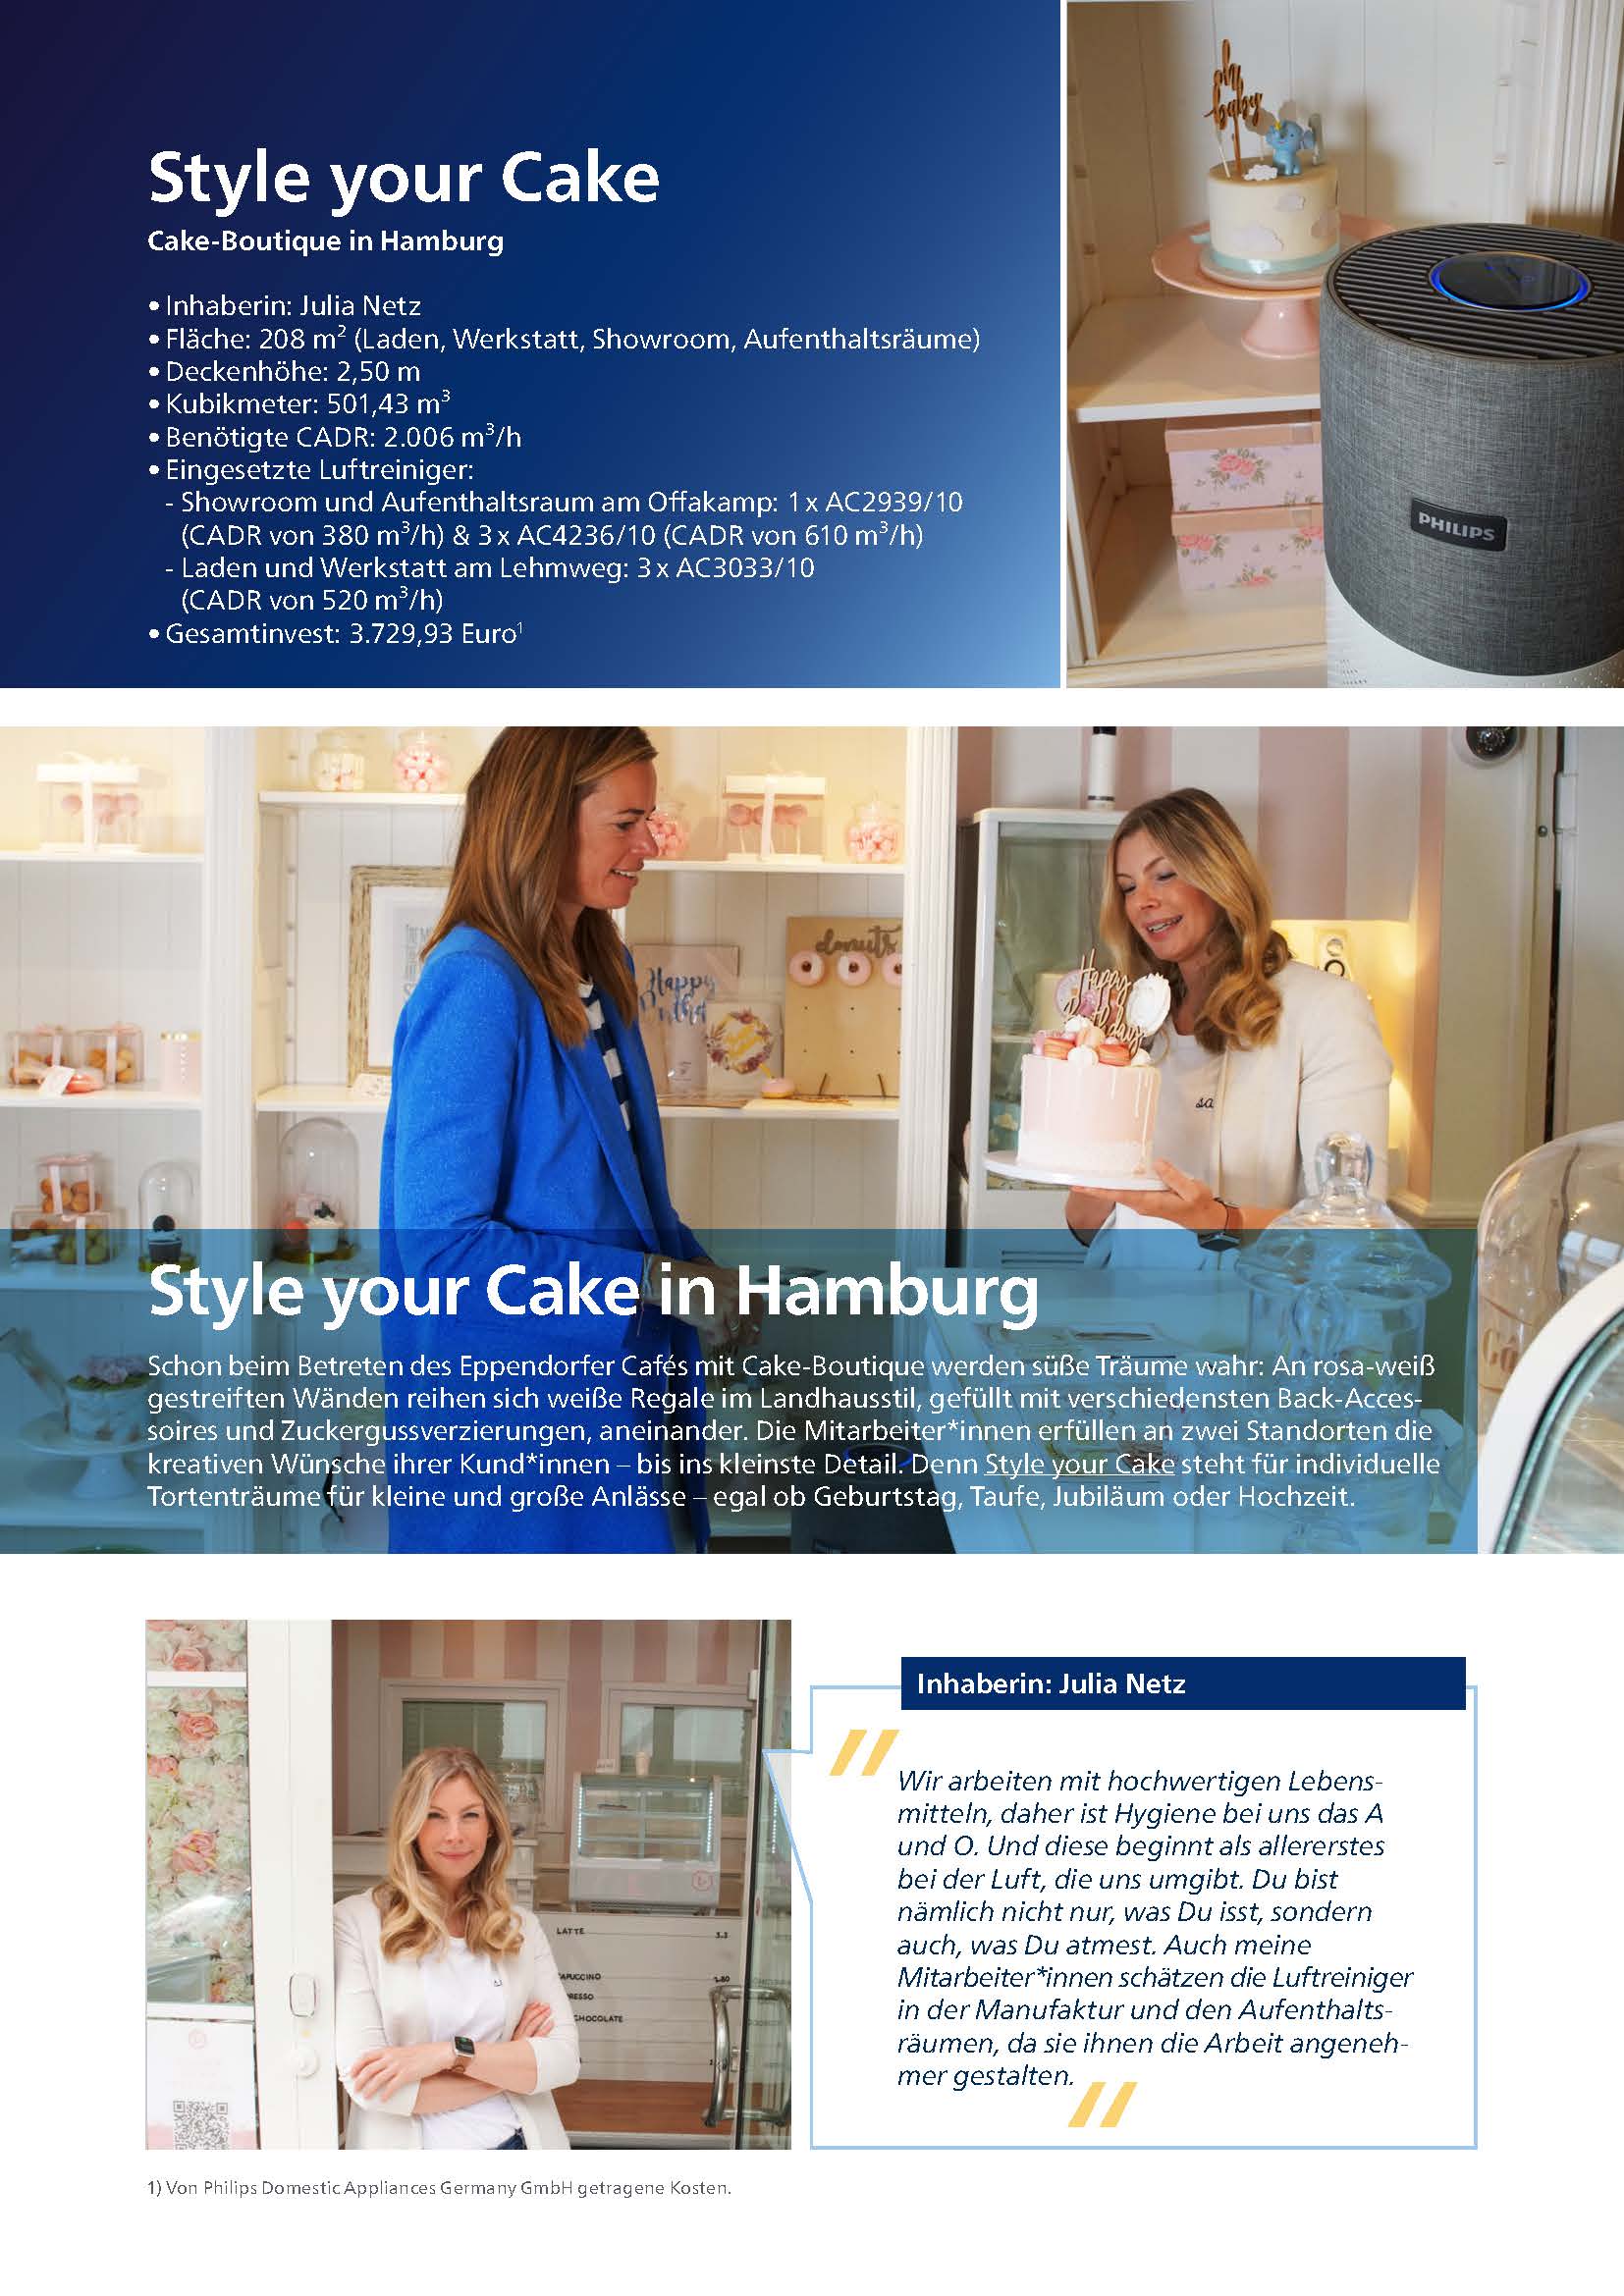 Philips Hauptsitz in Hamburg download pdf